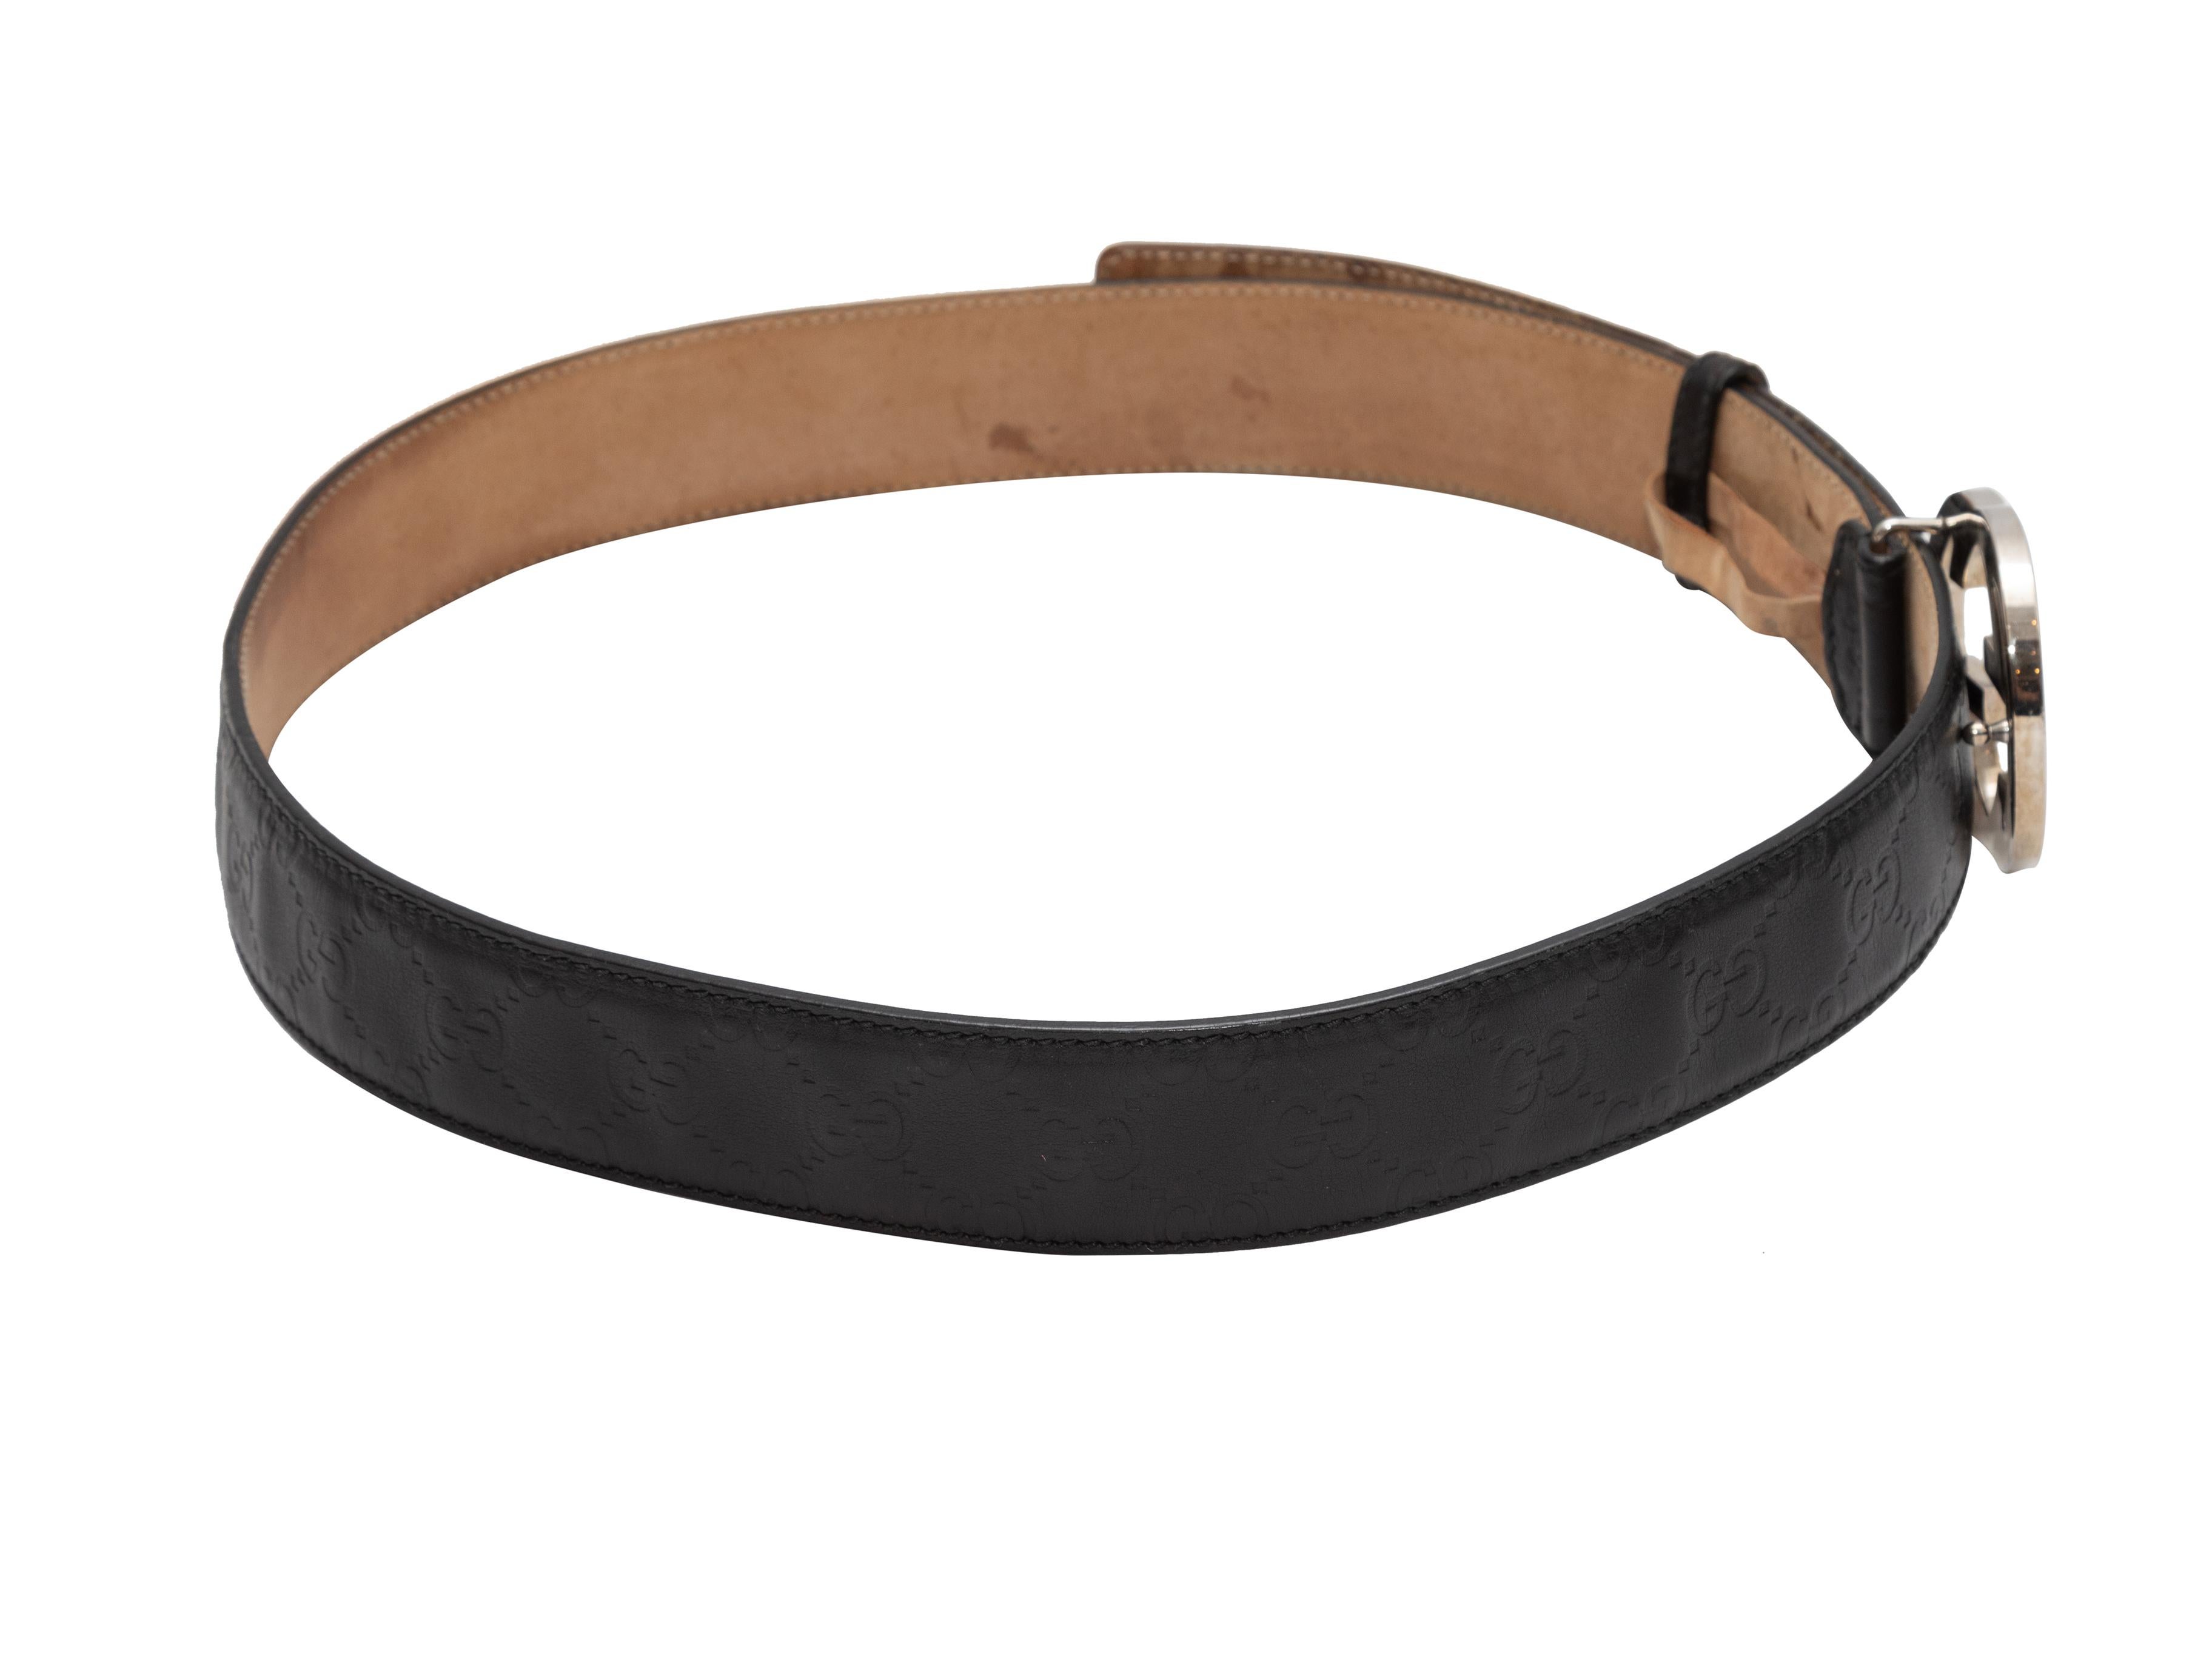 Black Guccissima leather belt by Gucci. Silver-tone GG peg-in-hole closure. 1.5